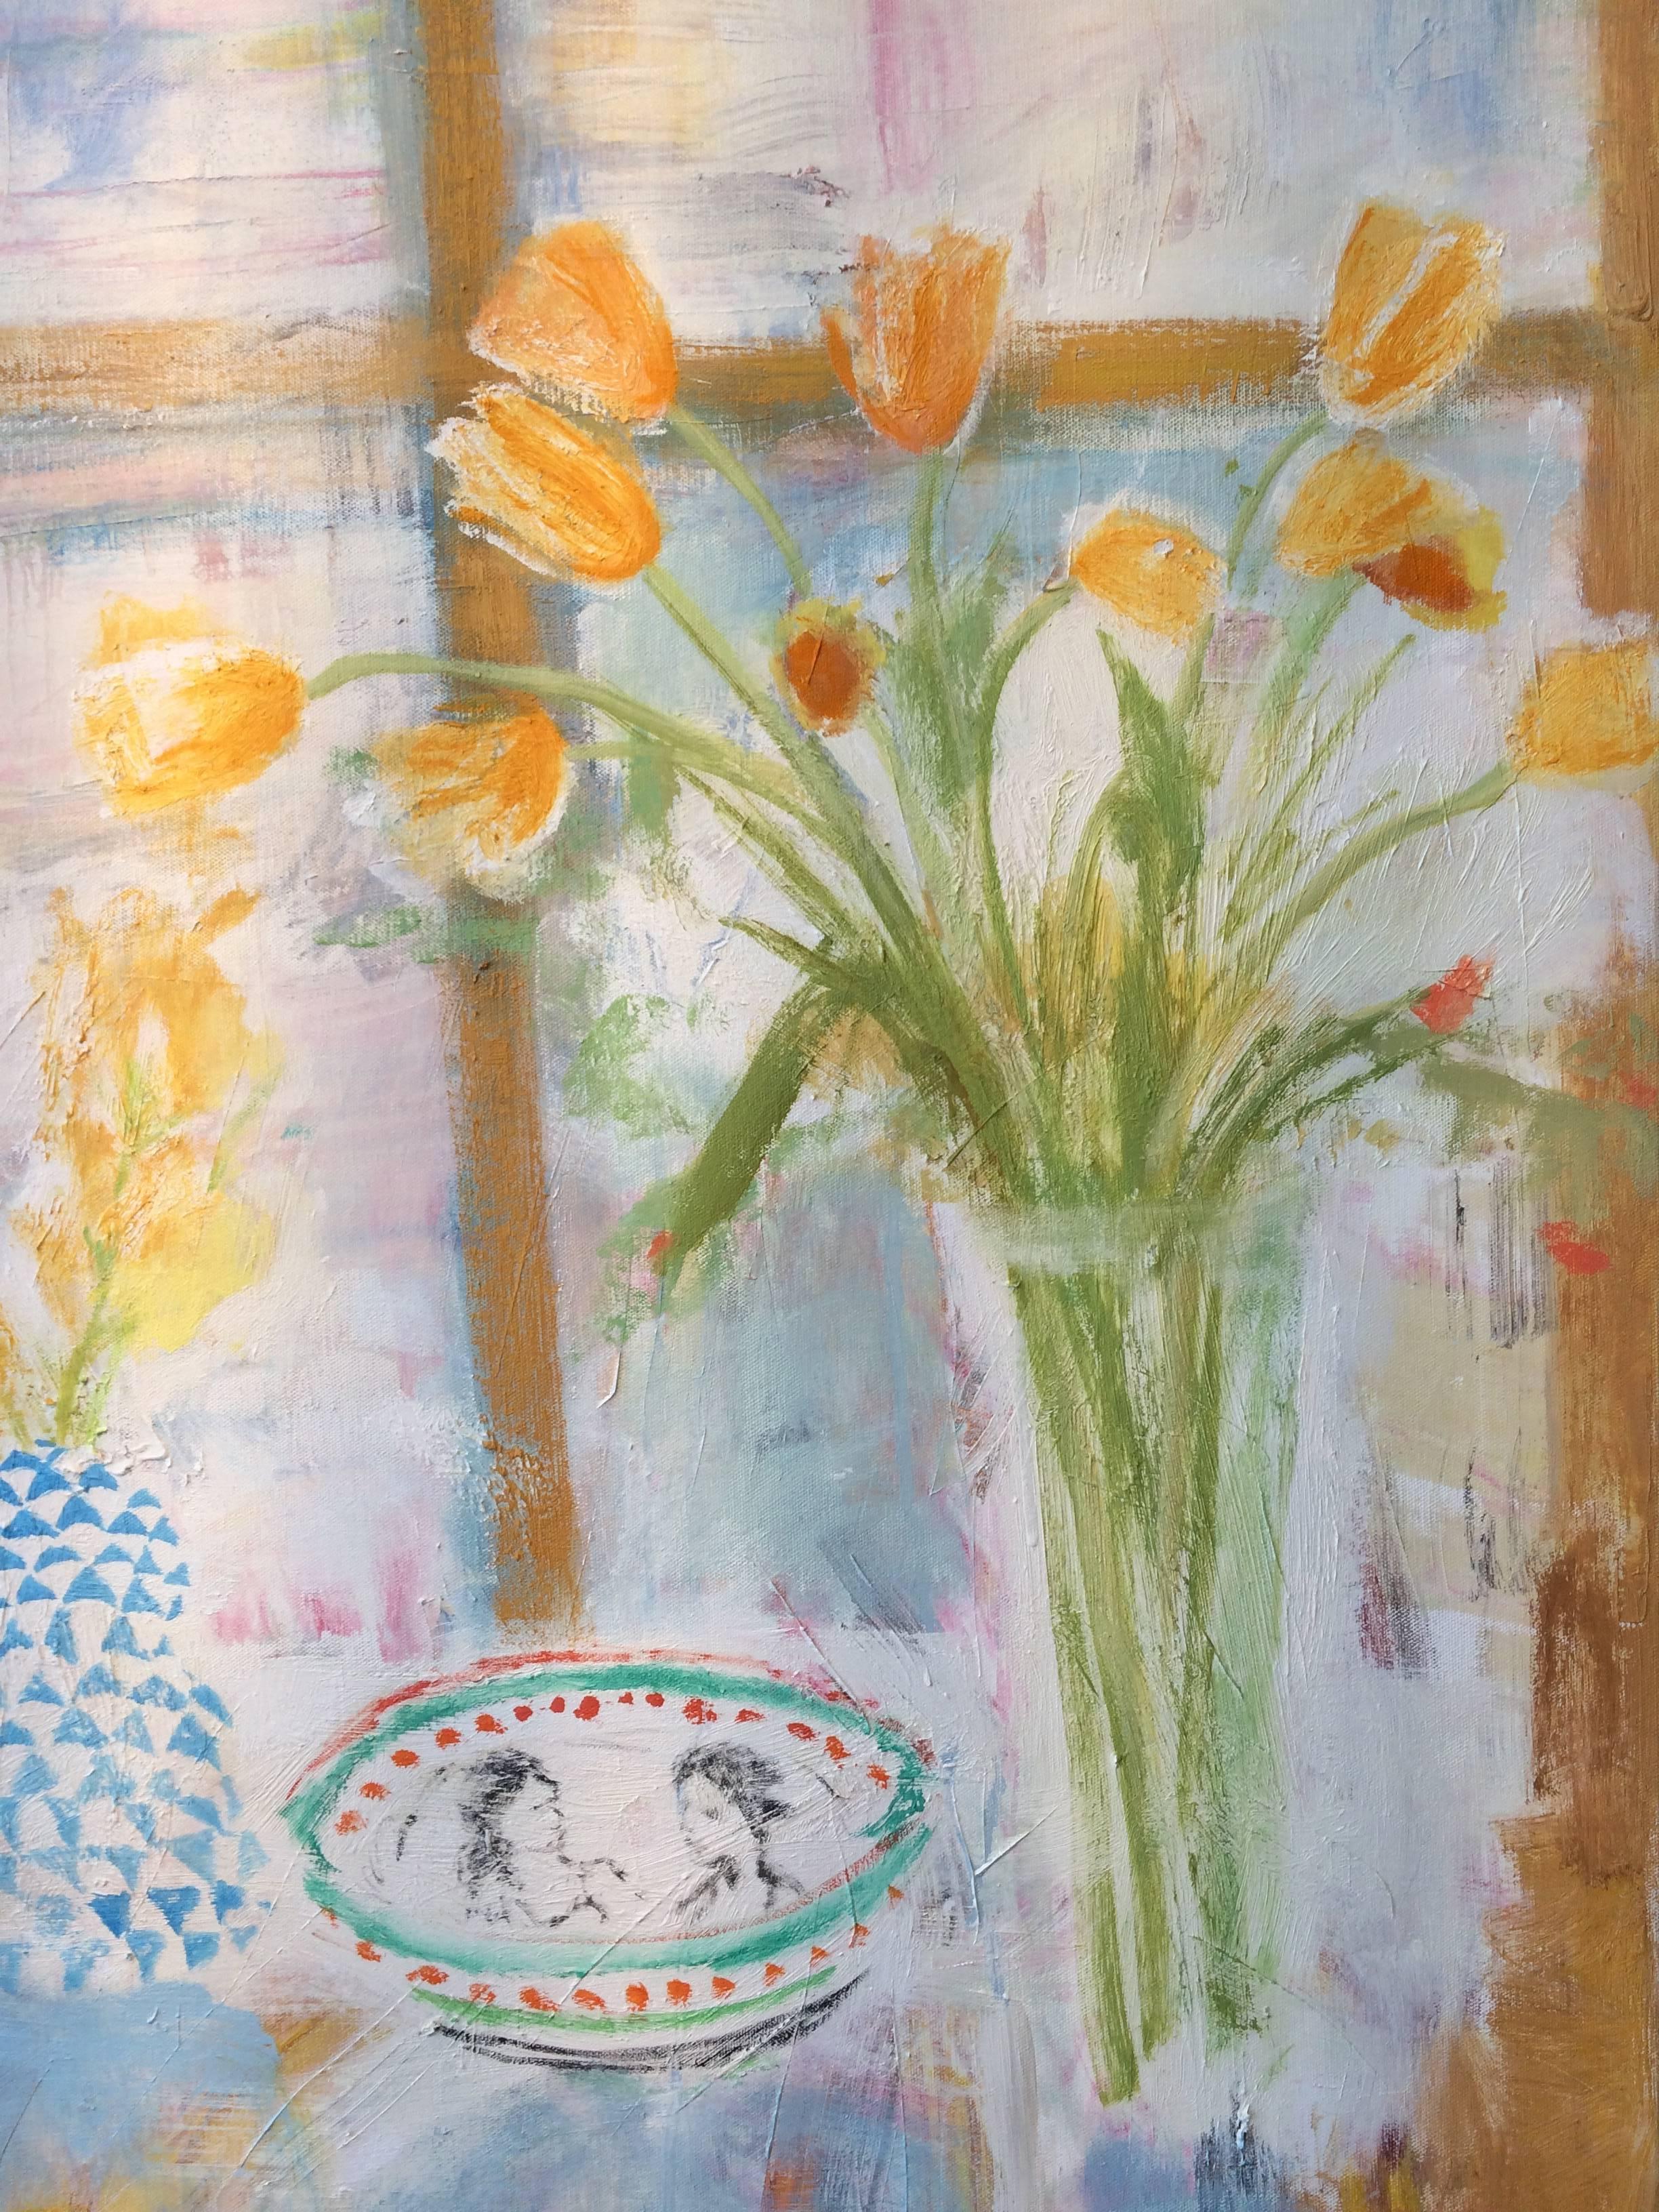 Paule's Table, Yellow Tulips, Orange Gladiolas, Fruit, Window, Blue Dining Room For Sale 1